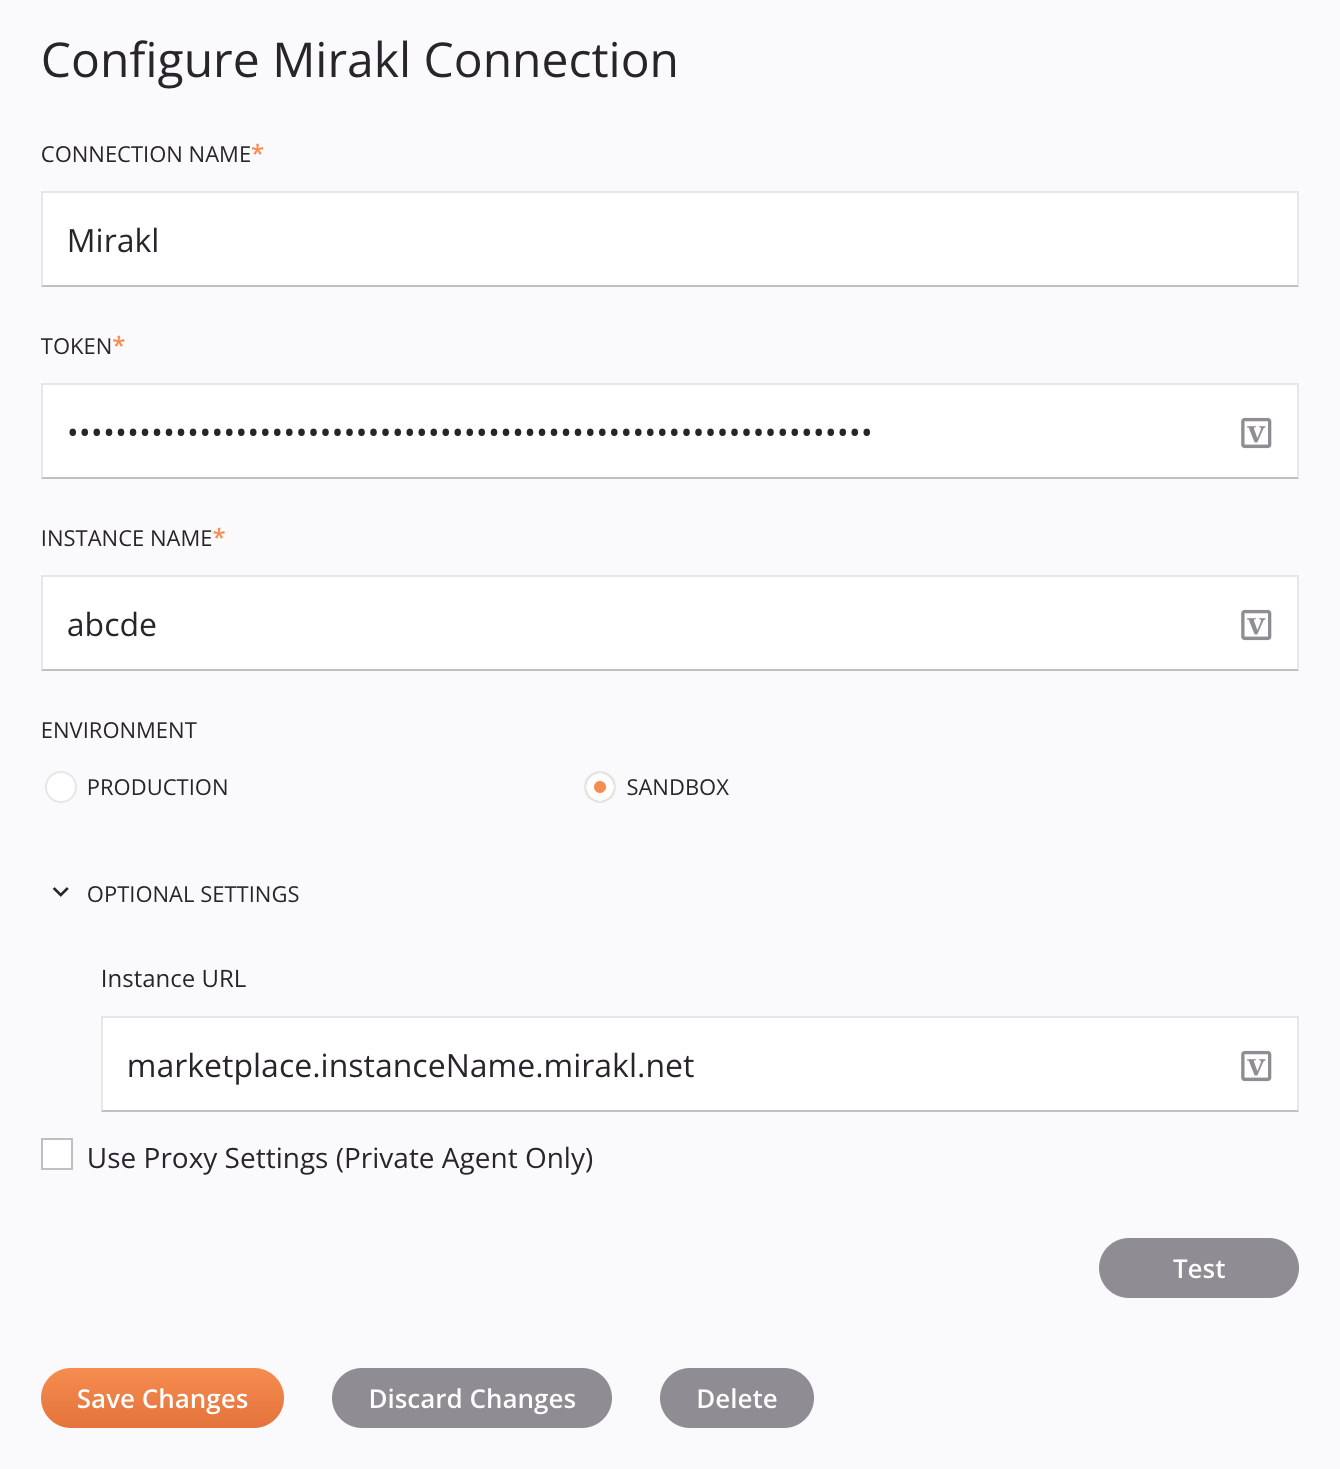 Mirakl connection configuration